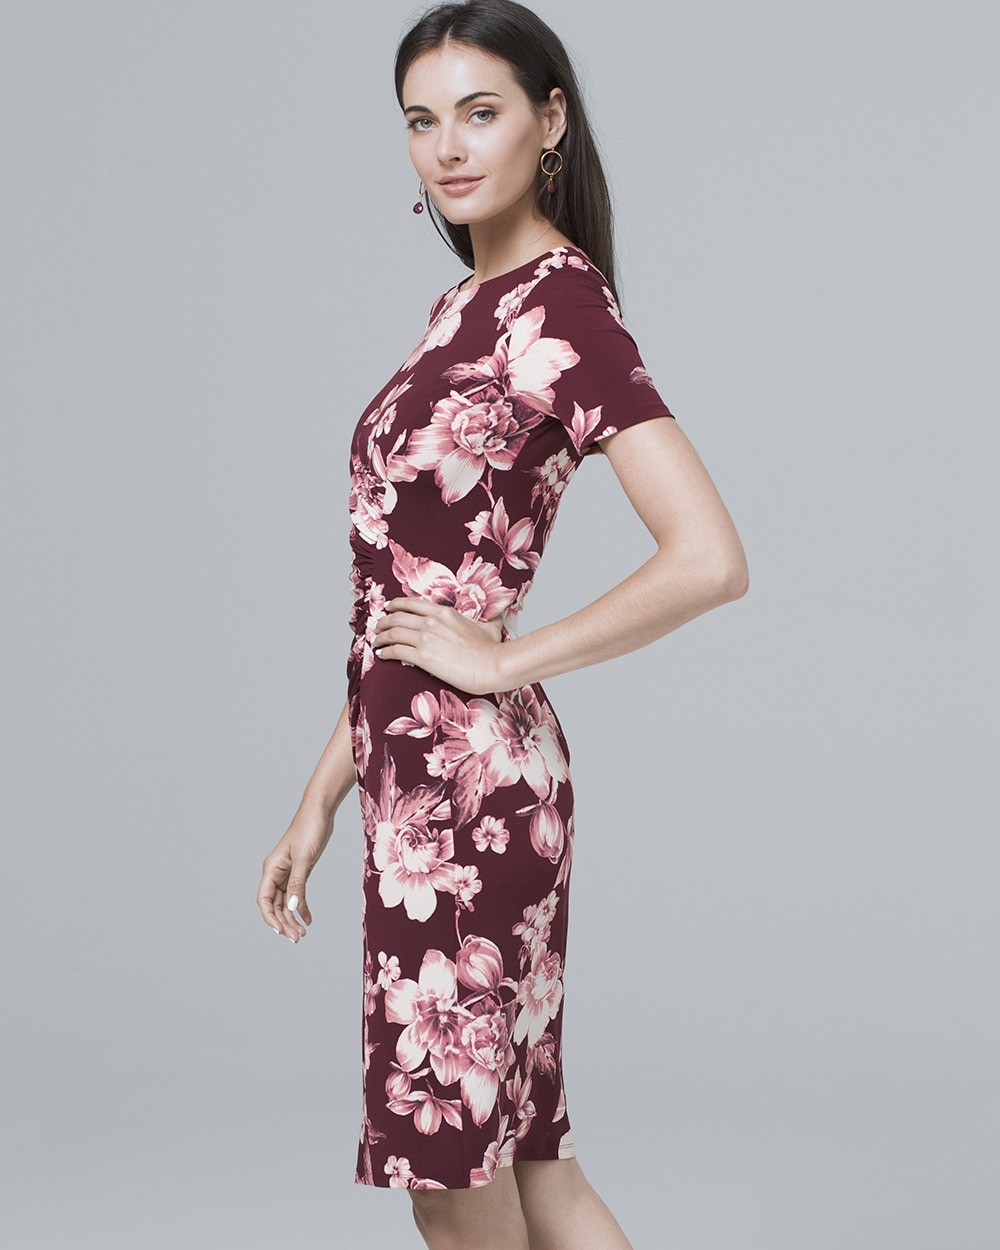 Short-Sleeve Floral Knit Sheath Dress - White House Black Market